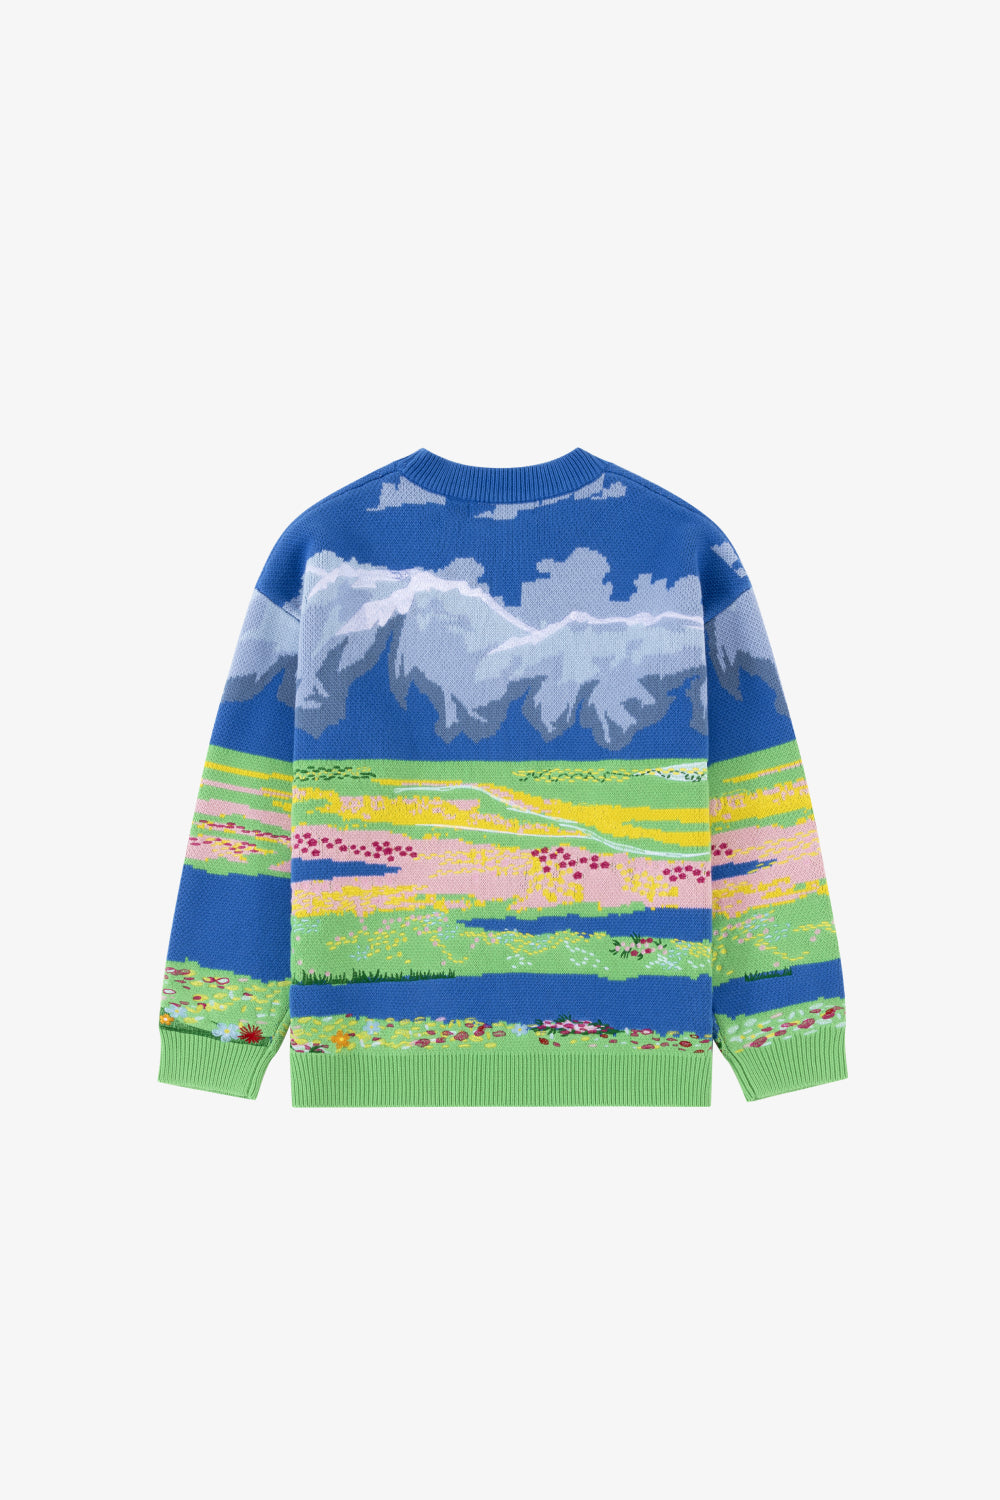 Secret Garden Embroidery Sweater